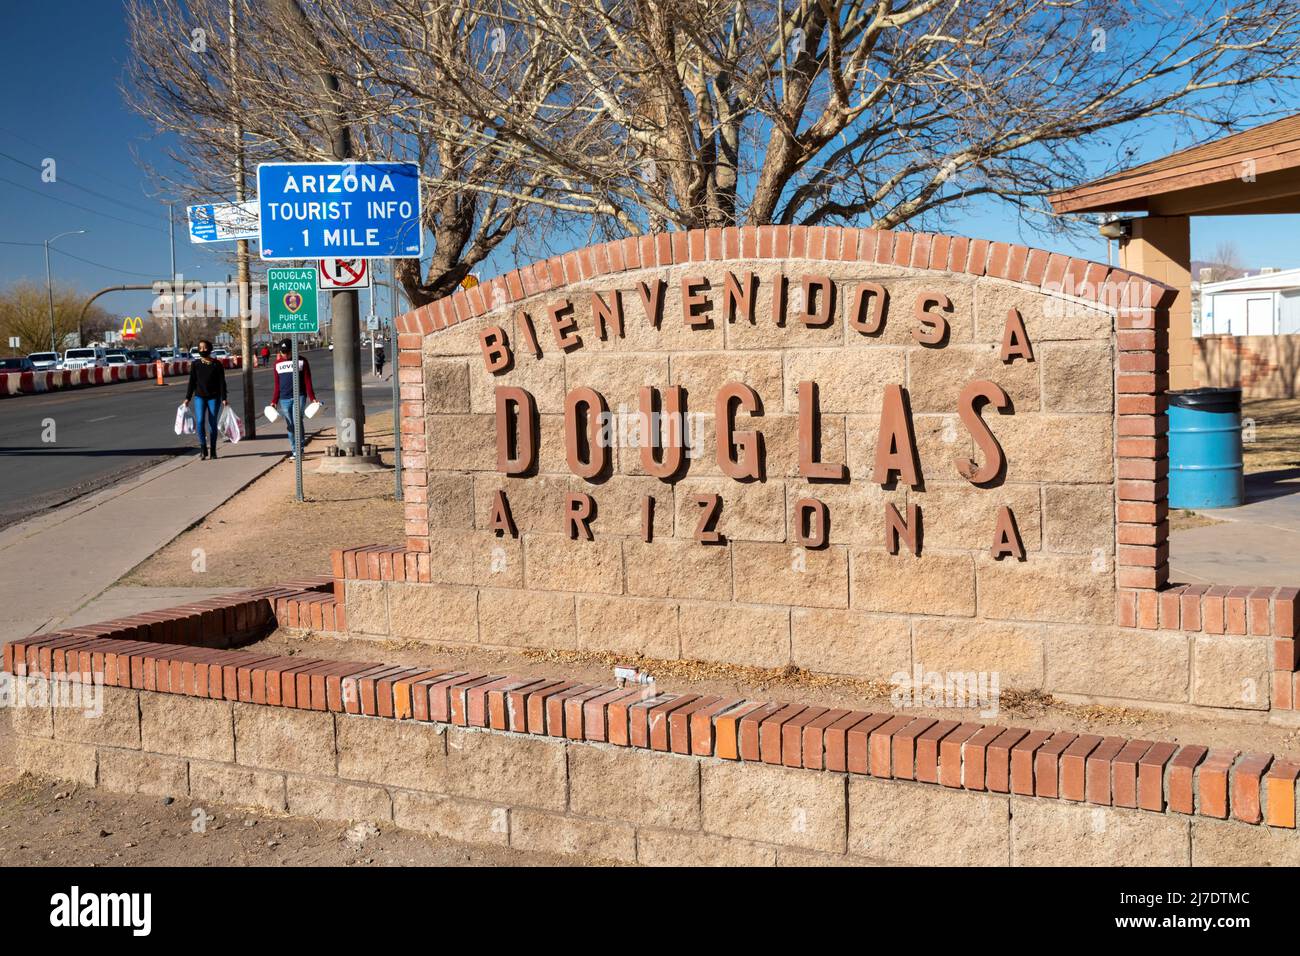 Douglas, Arizona - Un cartel da la bienvenida a los viajeros que cruzan la frontera desde Agua Prieta, México hasta Douglas, Arizona. Foto de stock